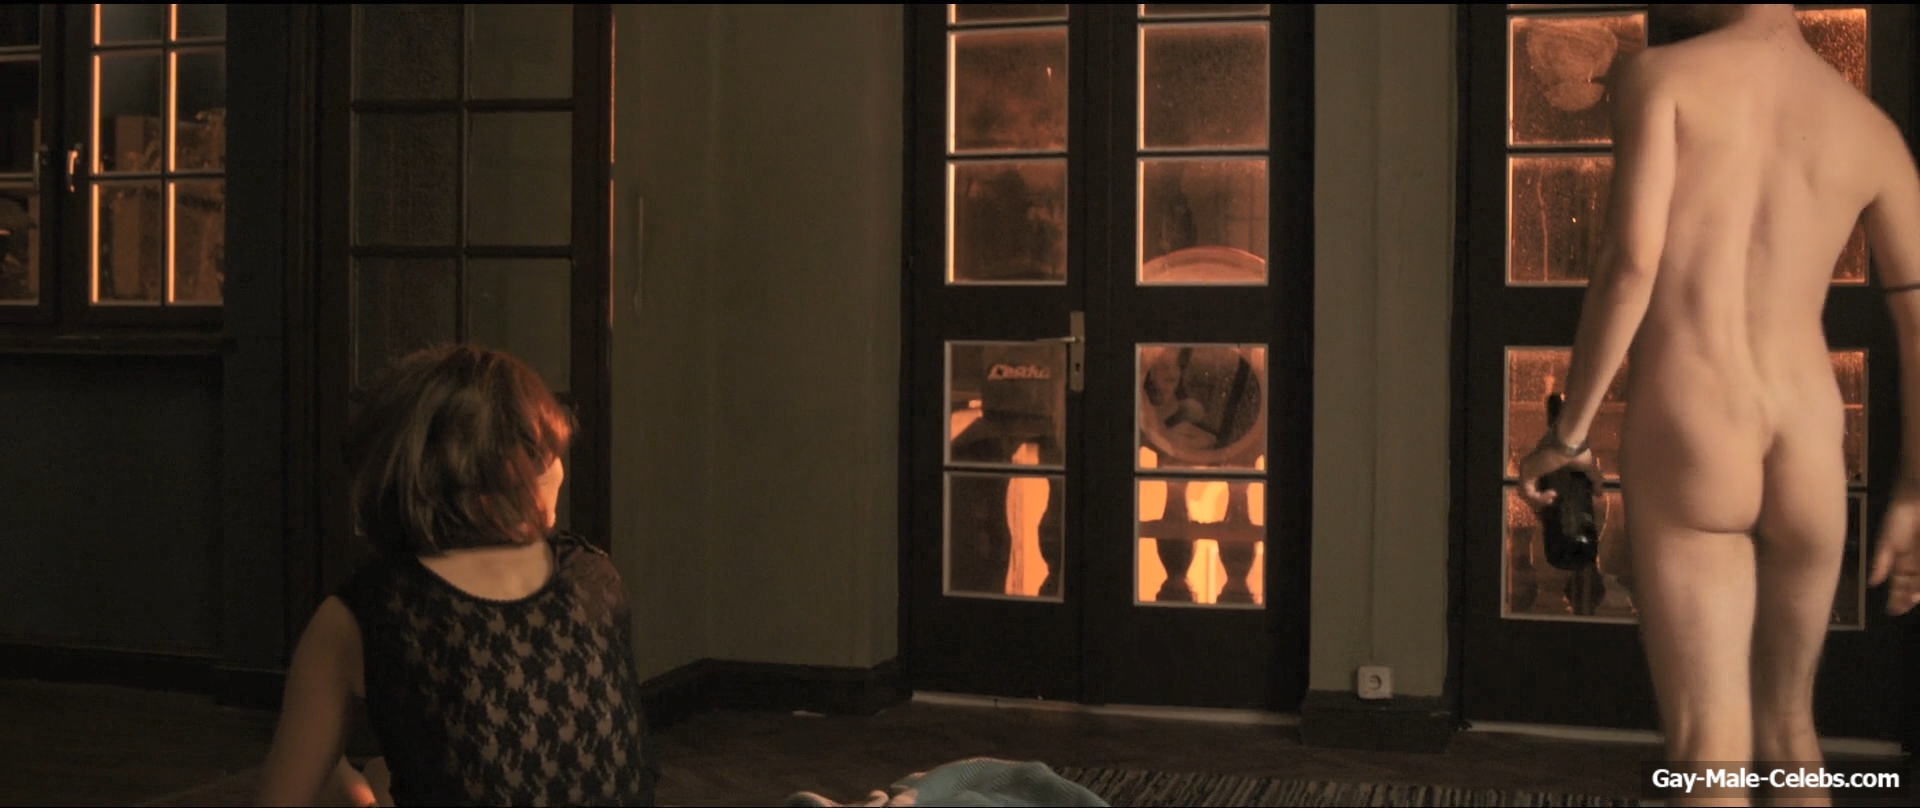 German Actor Maximilian “Max” Mauff Frontal Nude Scenes